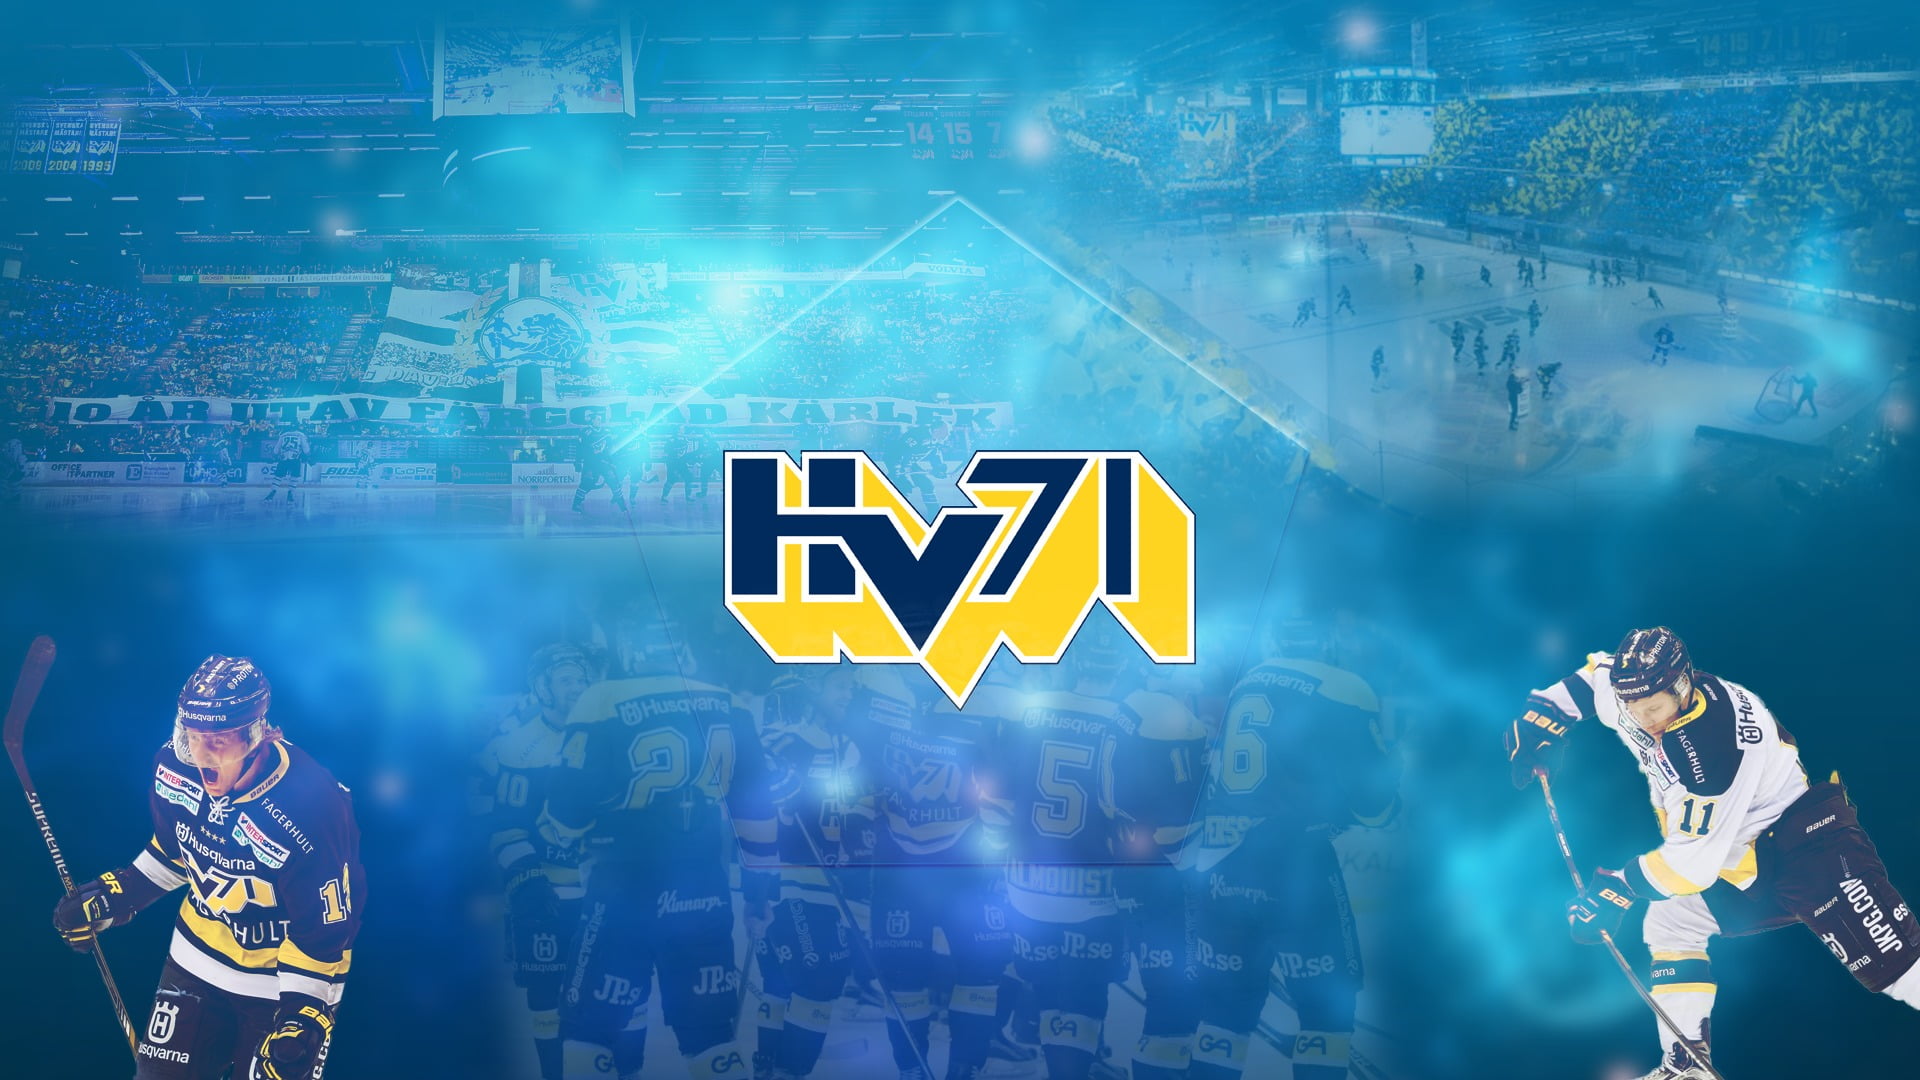 HV71, ice hockey, technology, data, communication, people, connection